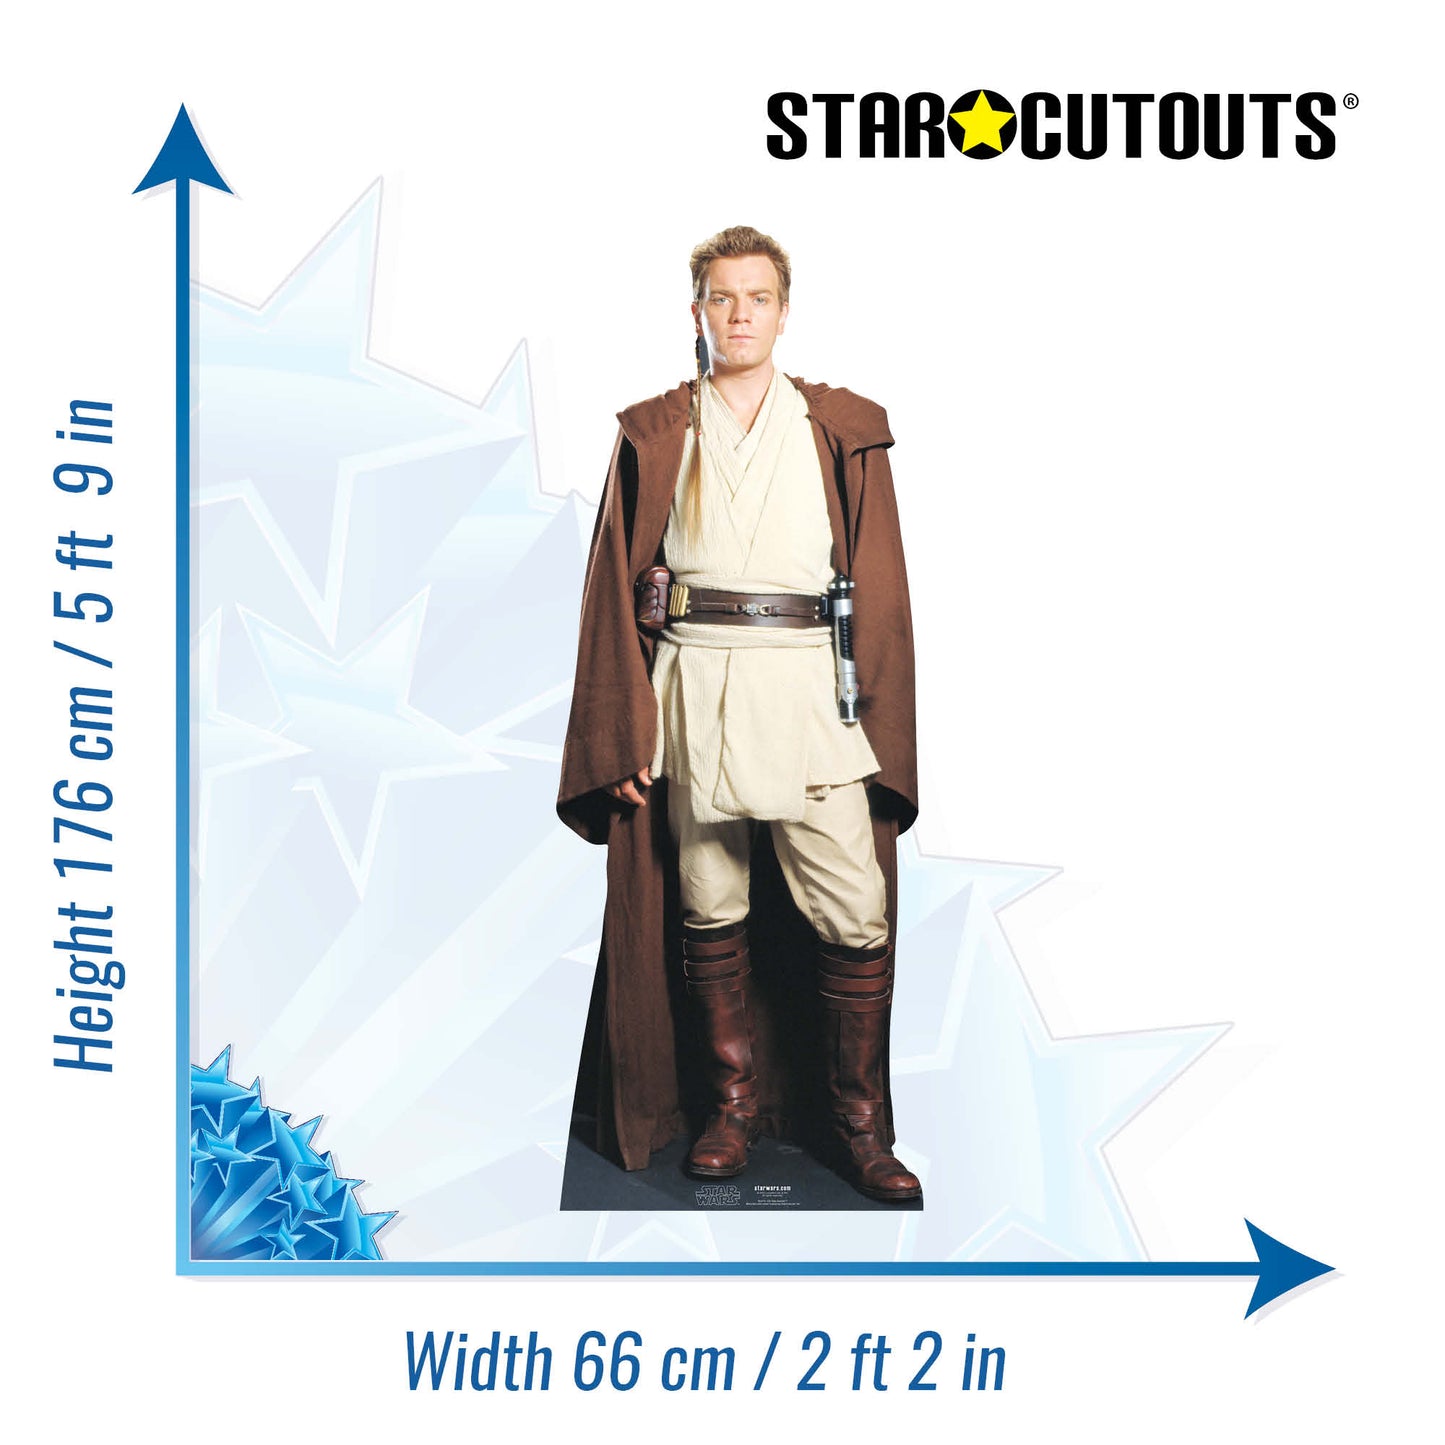 Obi Wan Kenobi Ewan McGregor Star Wars Cardboard Cutout